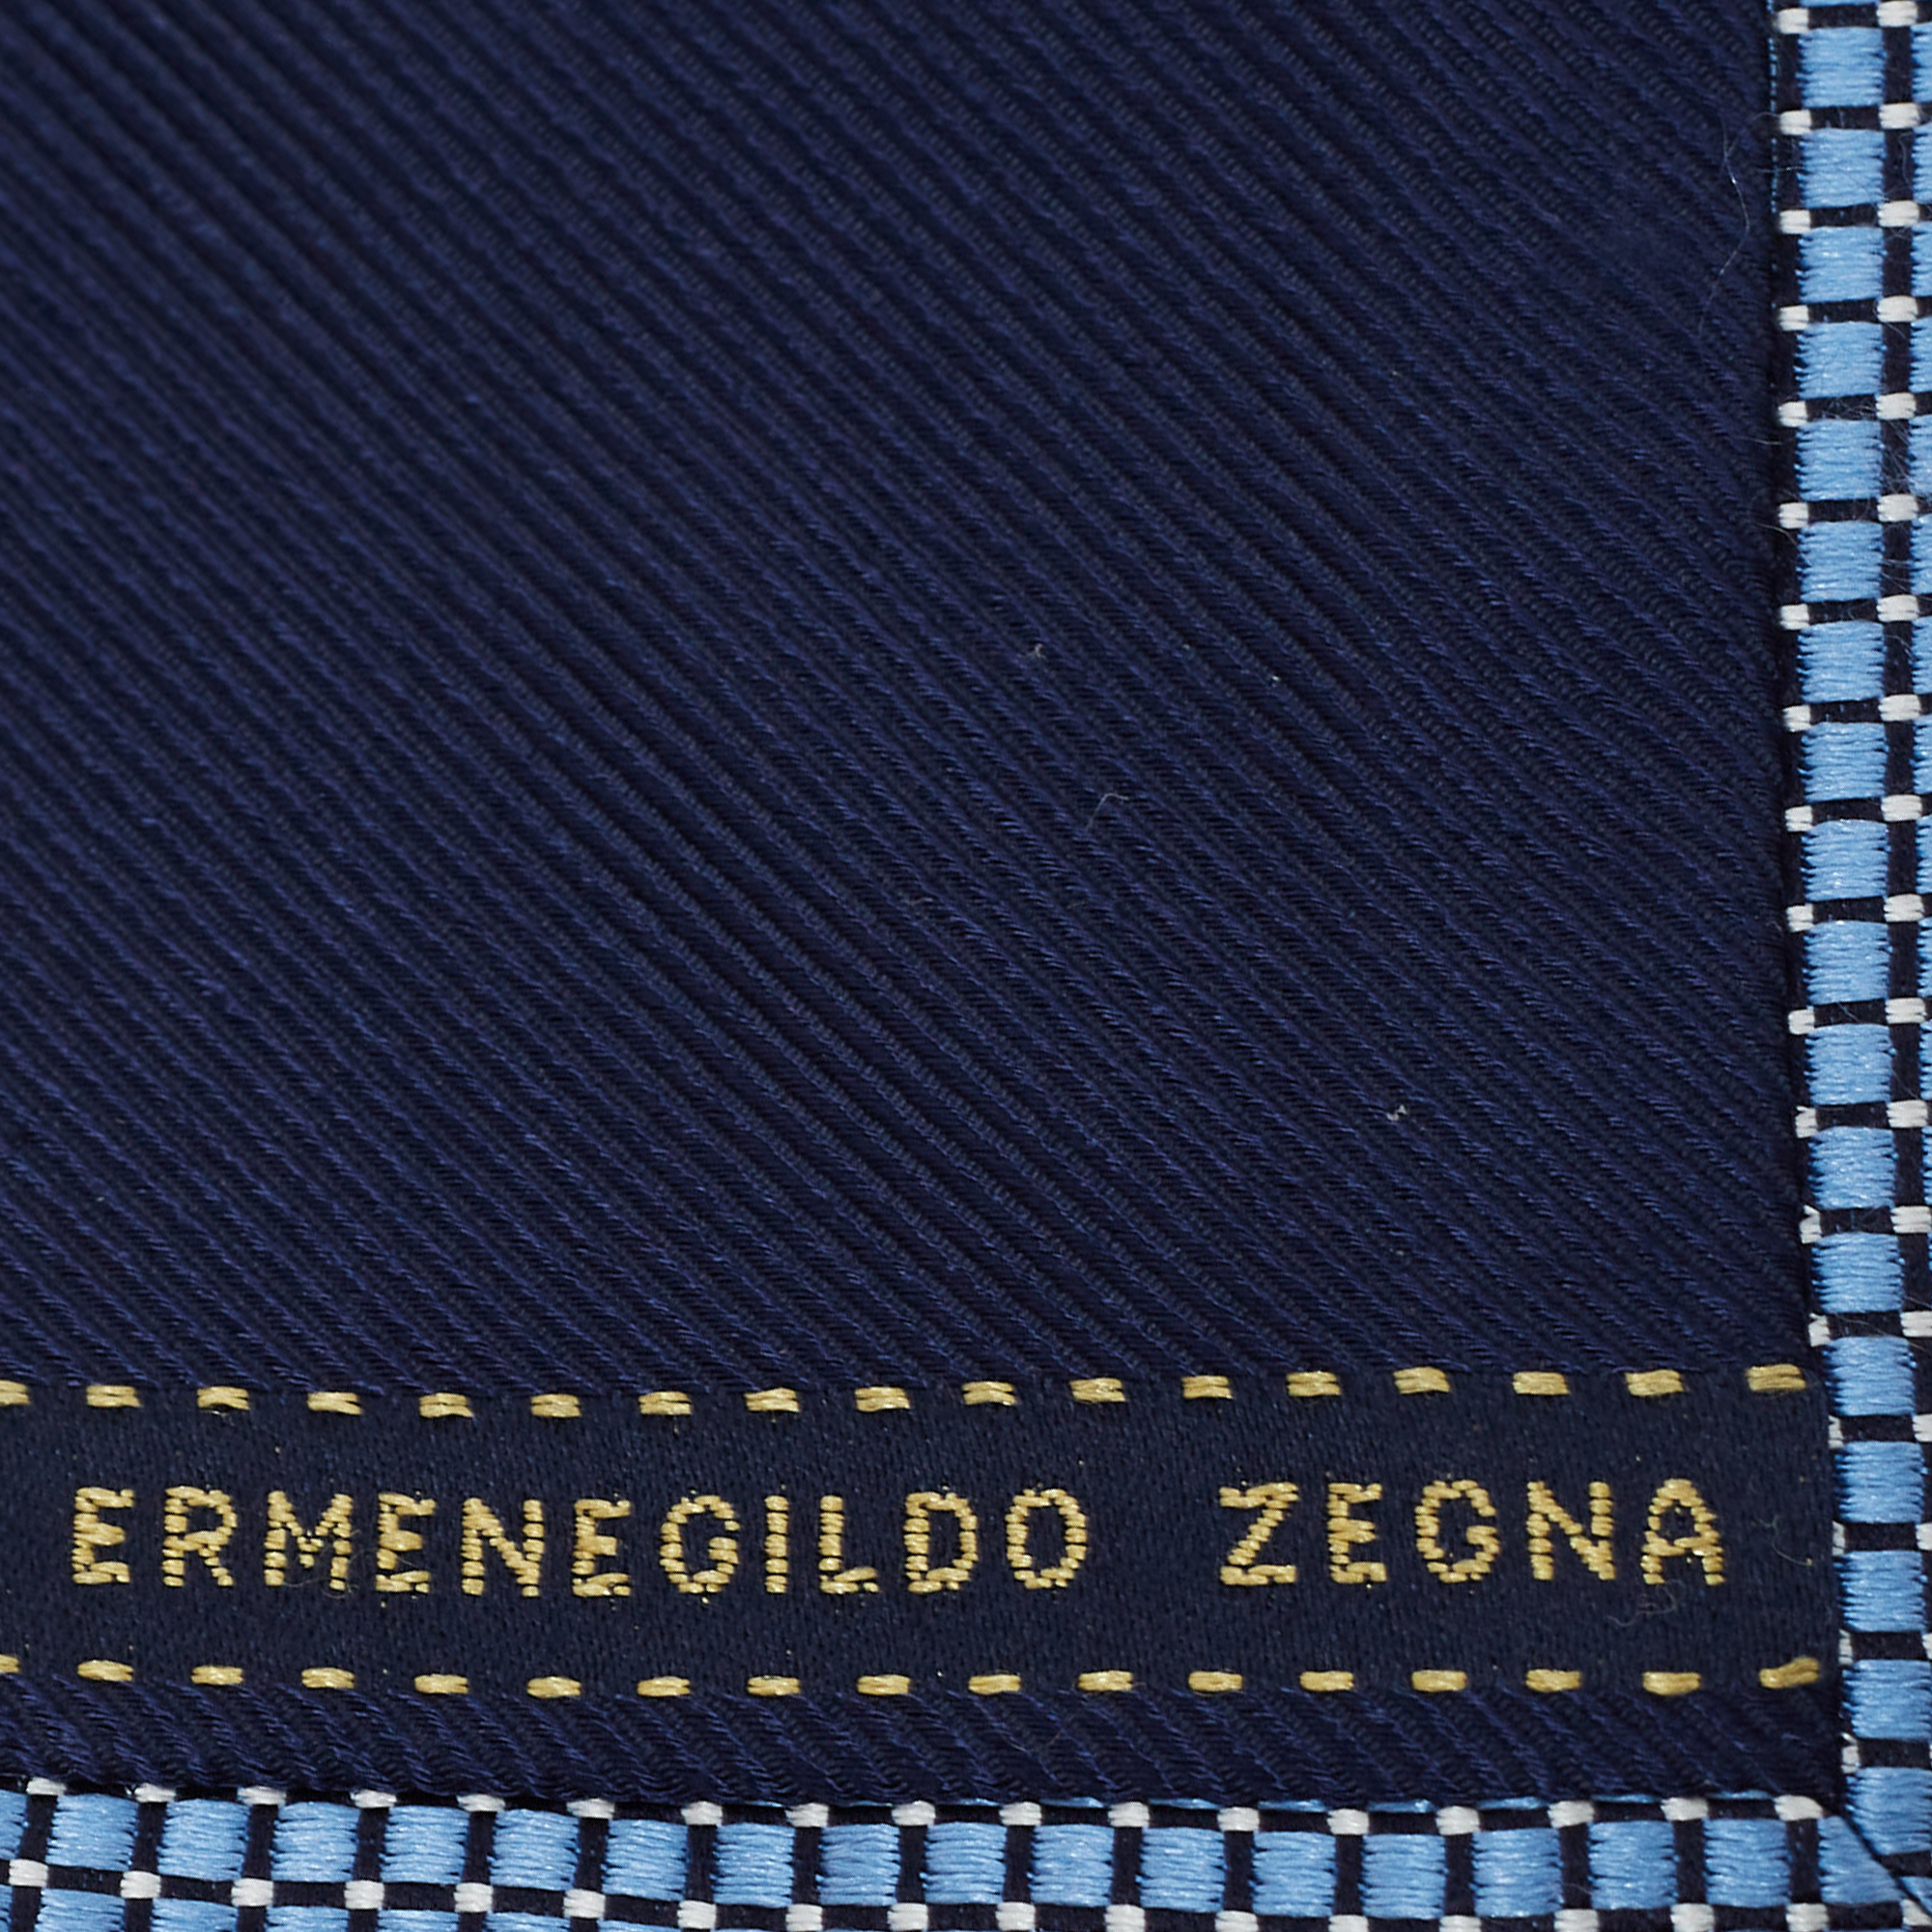 Ermenegildo Zegna Blue Patterned Silk Tie